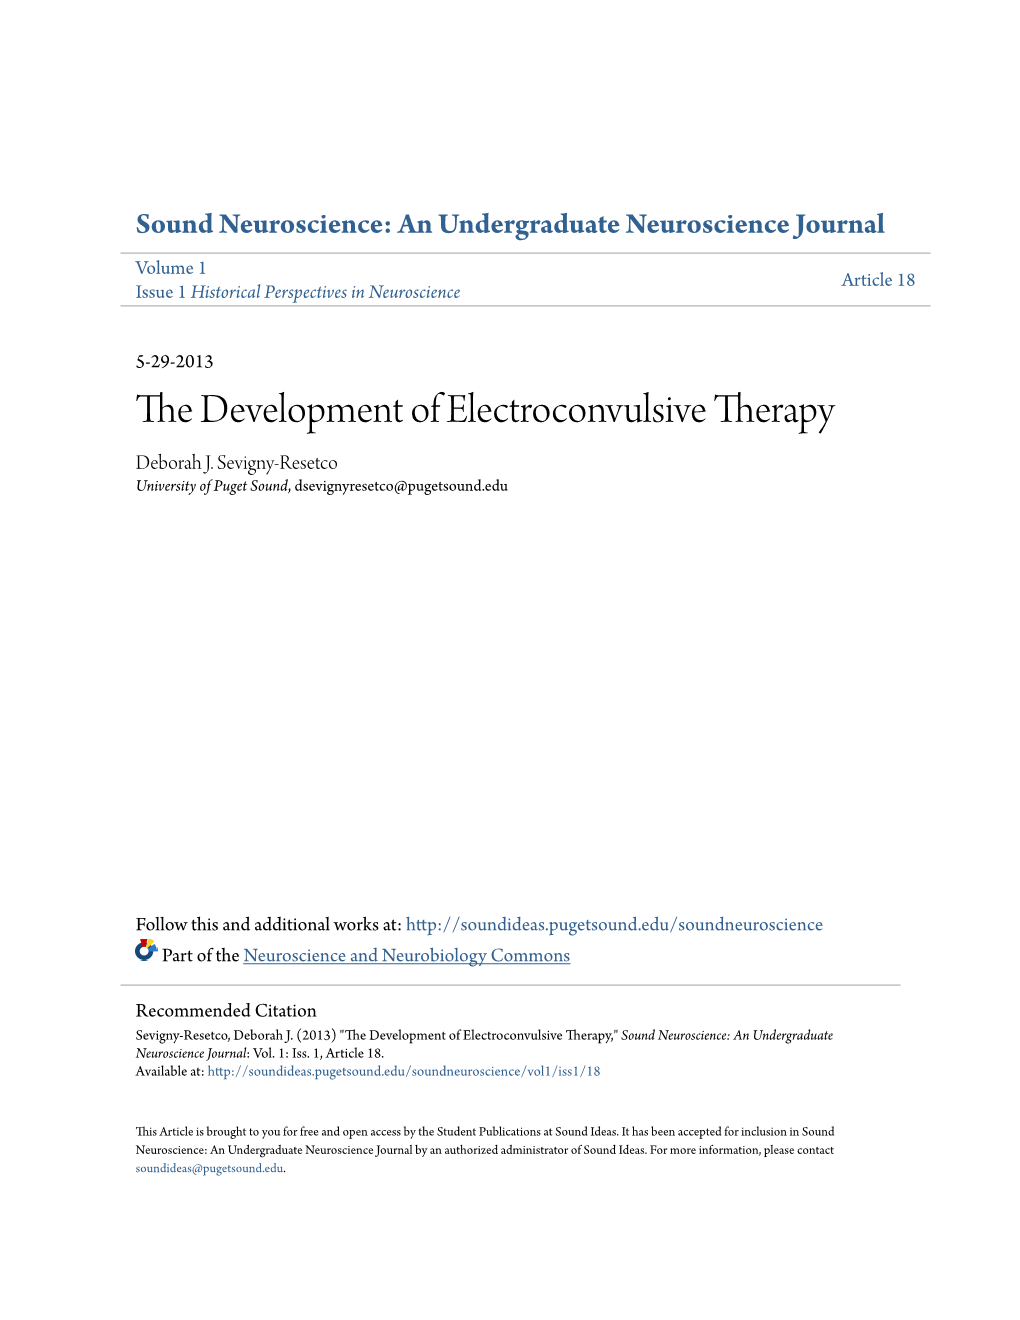 The Development of Electroconvulsive Therapy